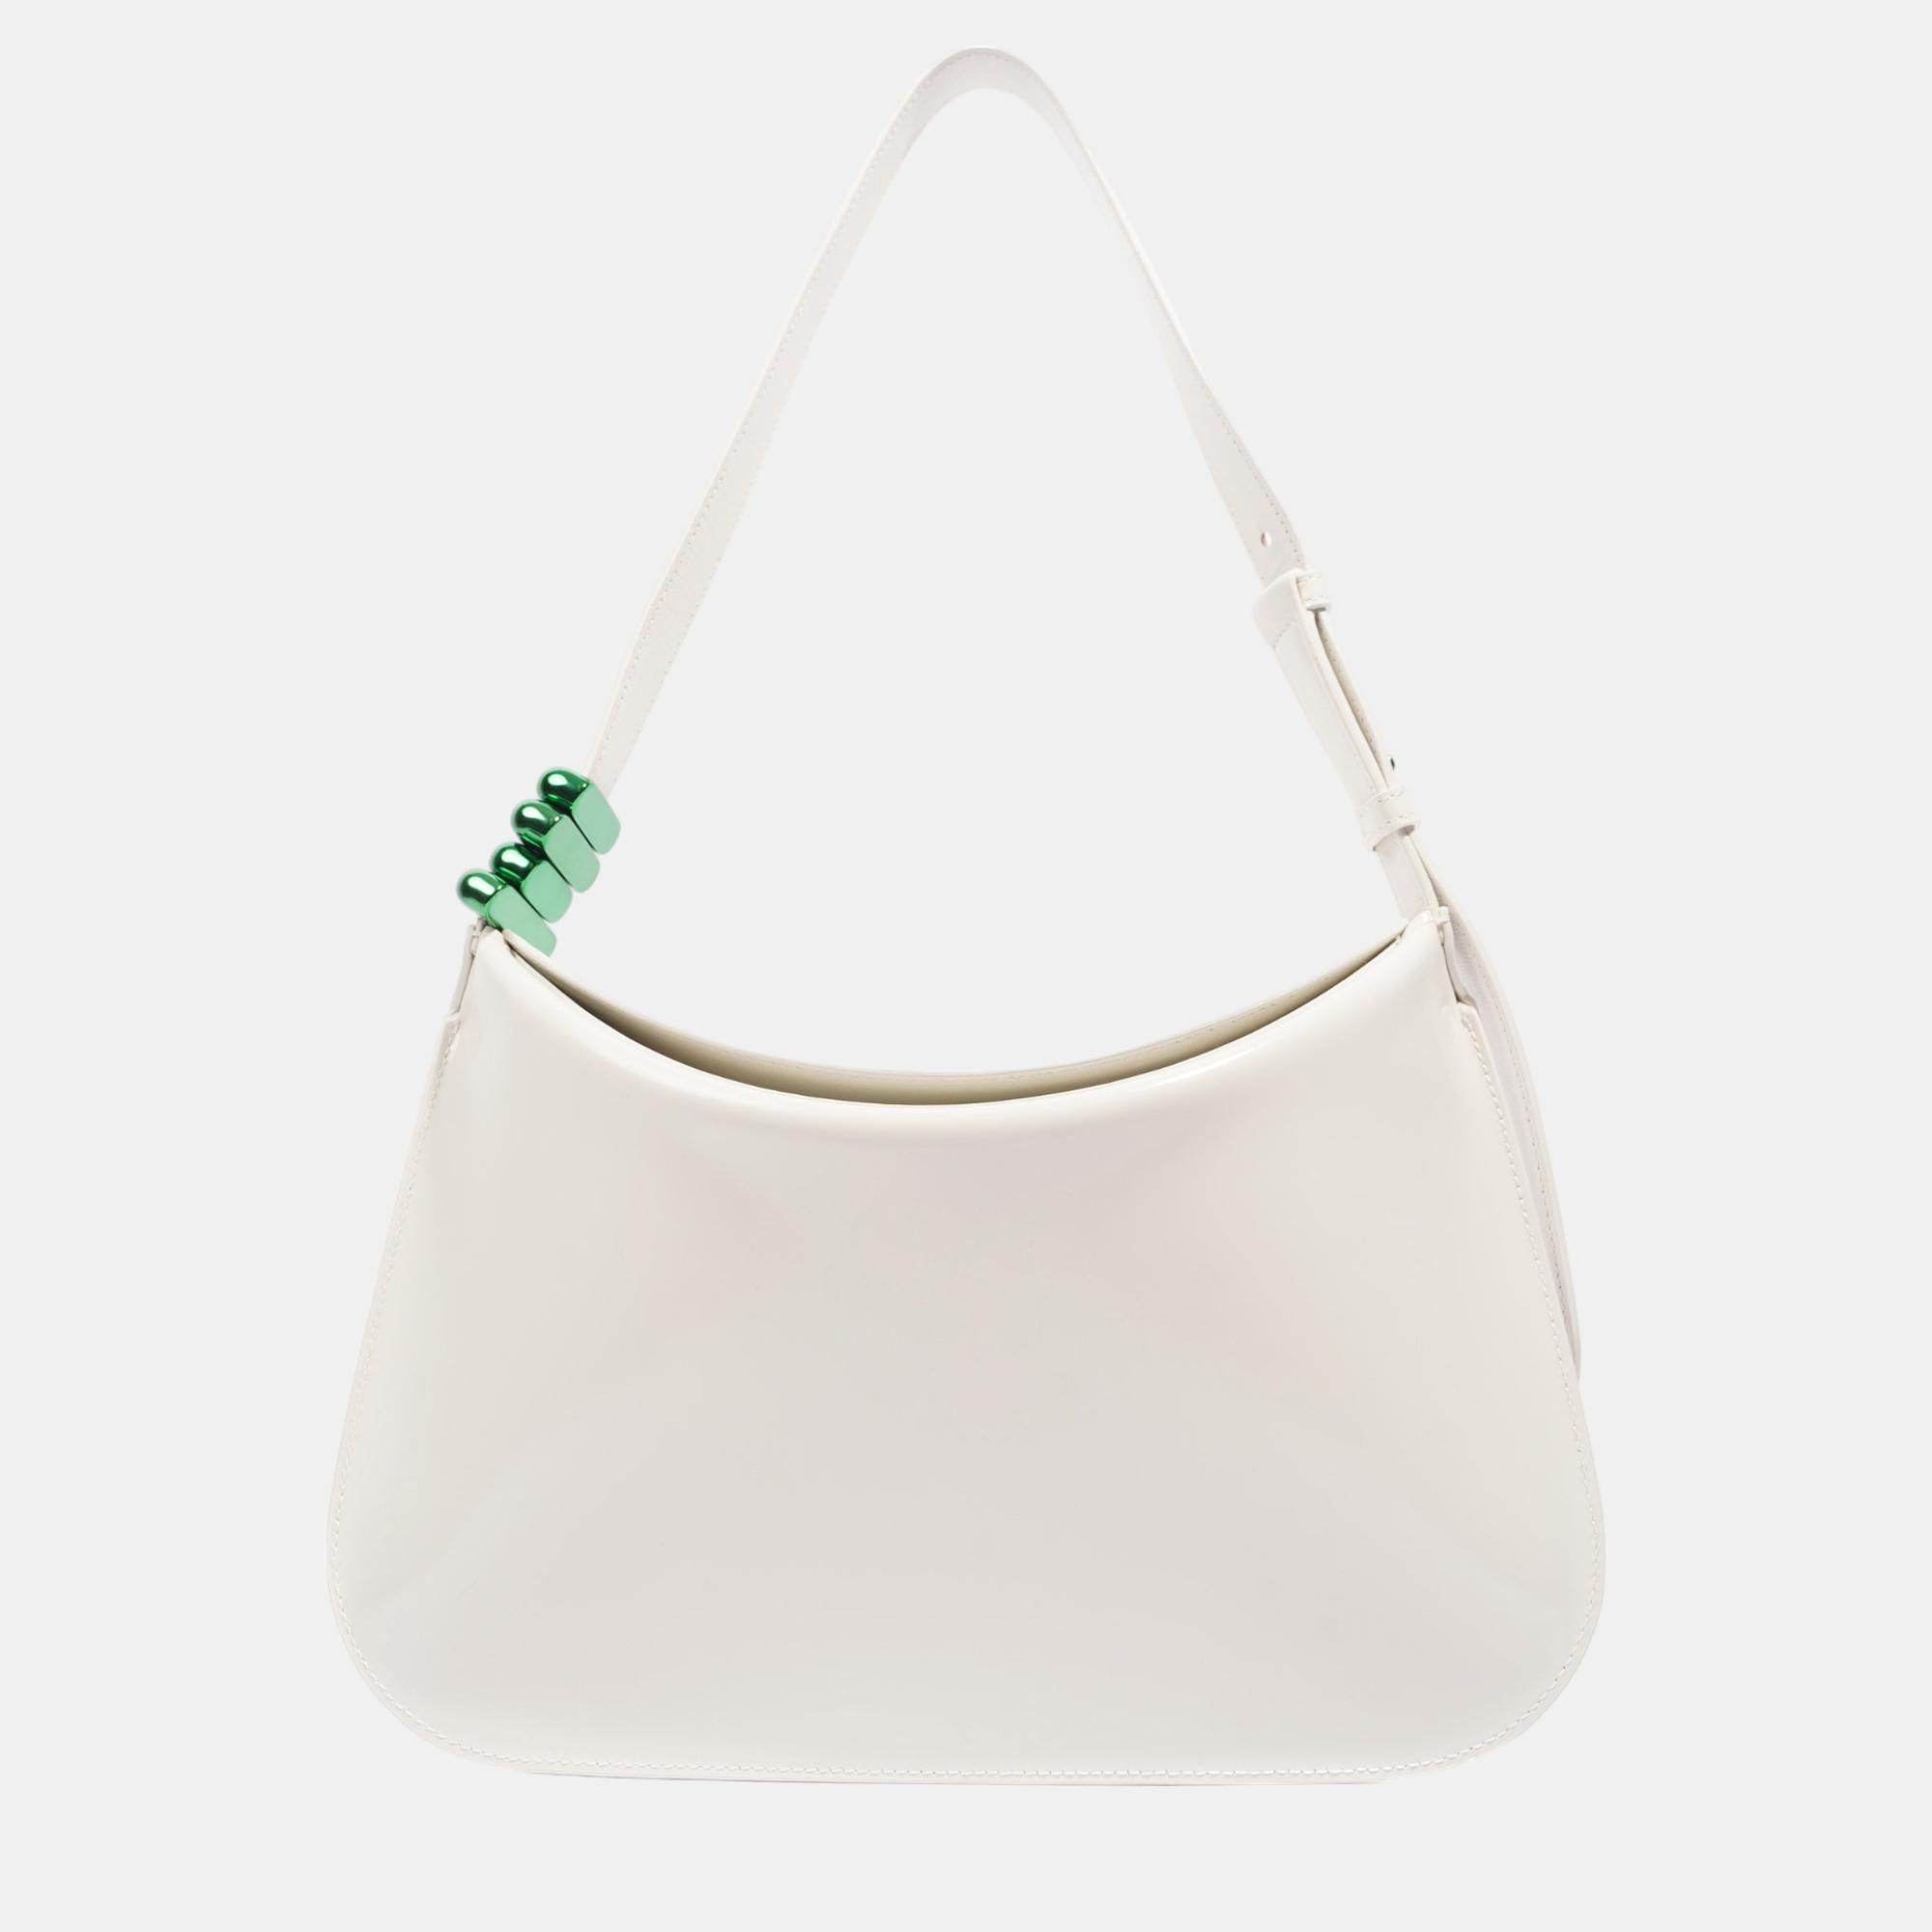 Bottega veneta womens shoulder bag white leather